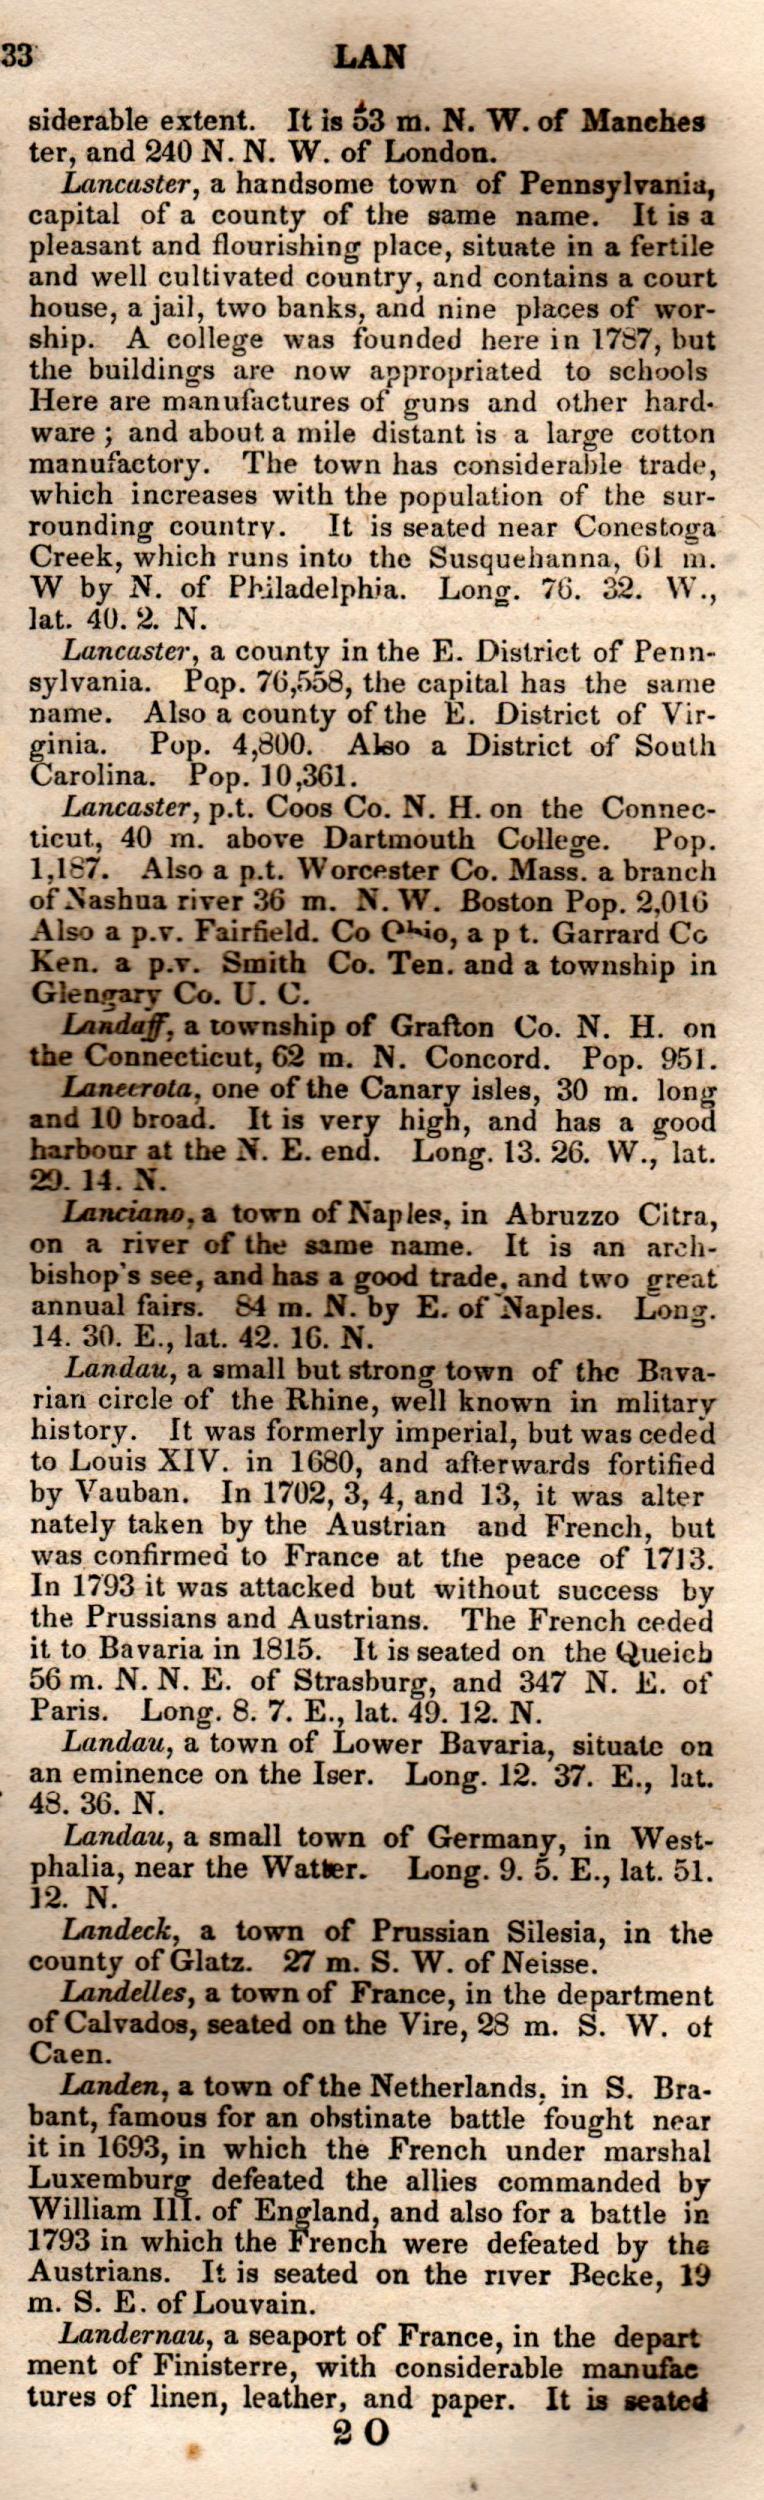 Brookes’ Universal Gazetteer (1850), Page 433 Right Column